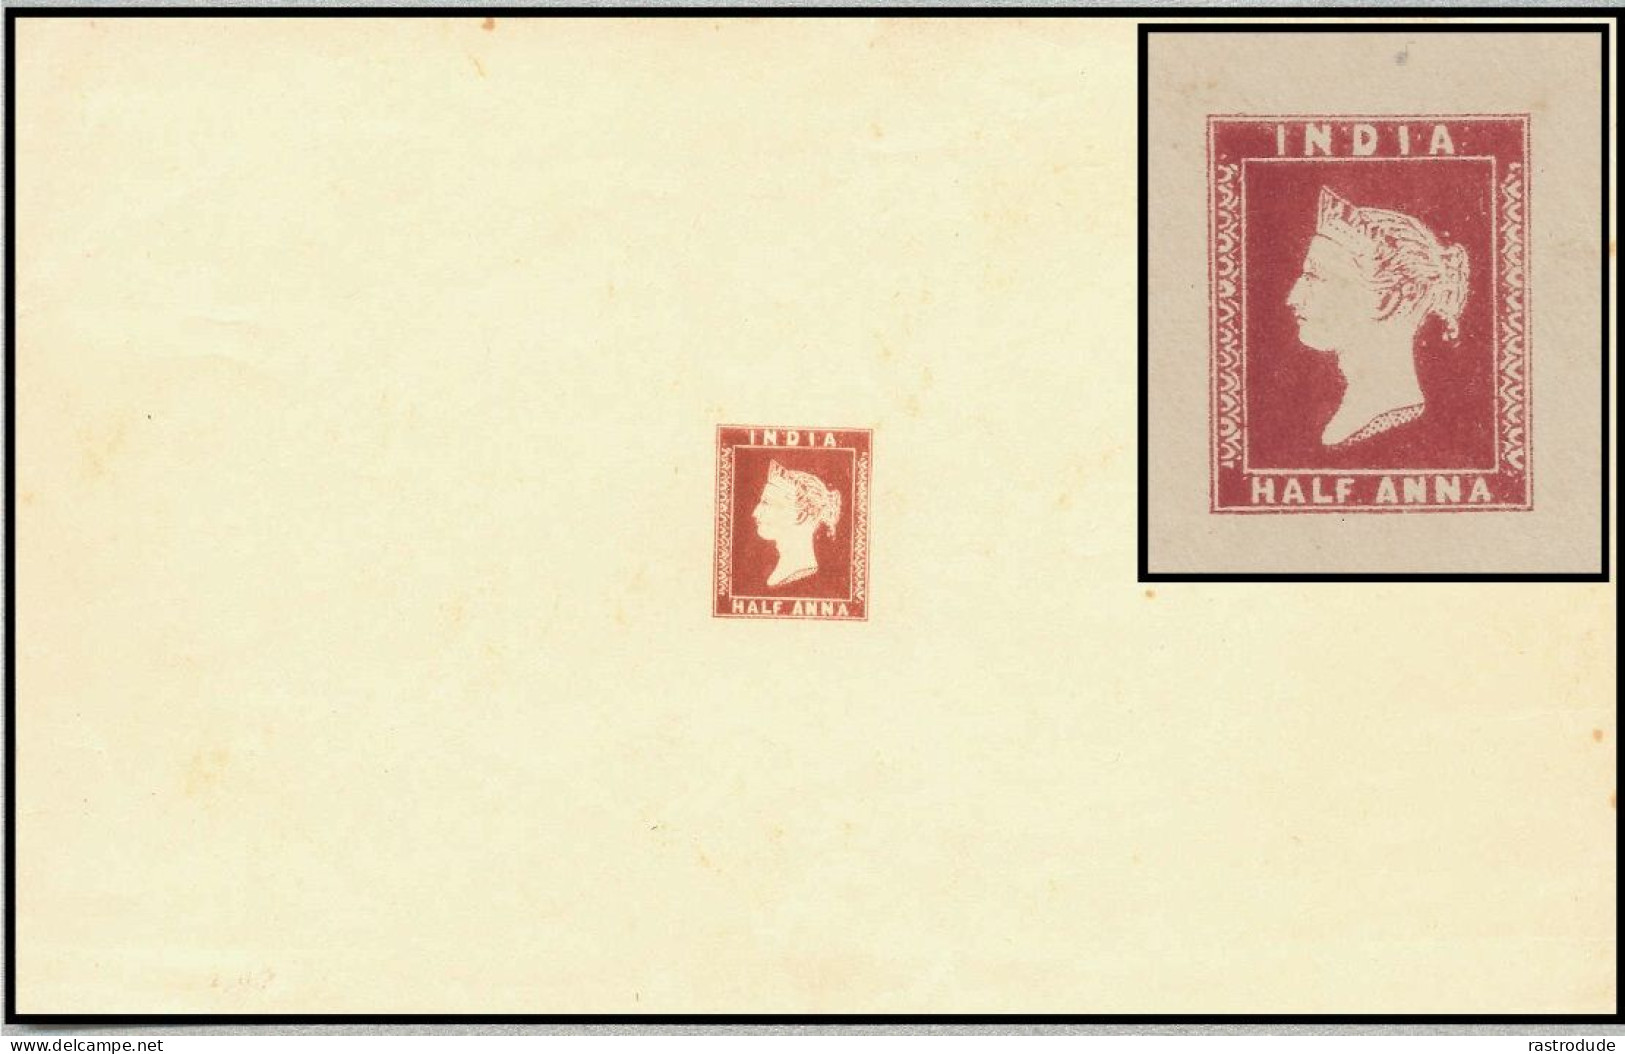 INDIA 1854 ½ A CAPT. THULLIER LITH. ESSAY SHEETLET, SPENCE Nº.68 172mm X 108mm - 1854 Britische Indien-Kompanie